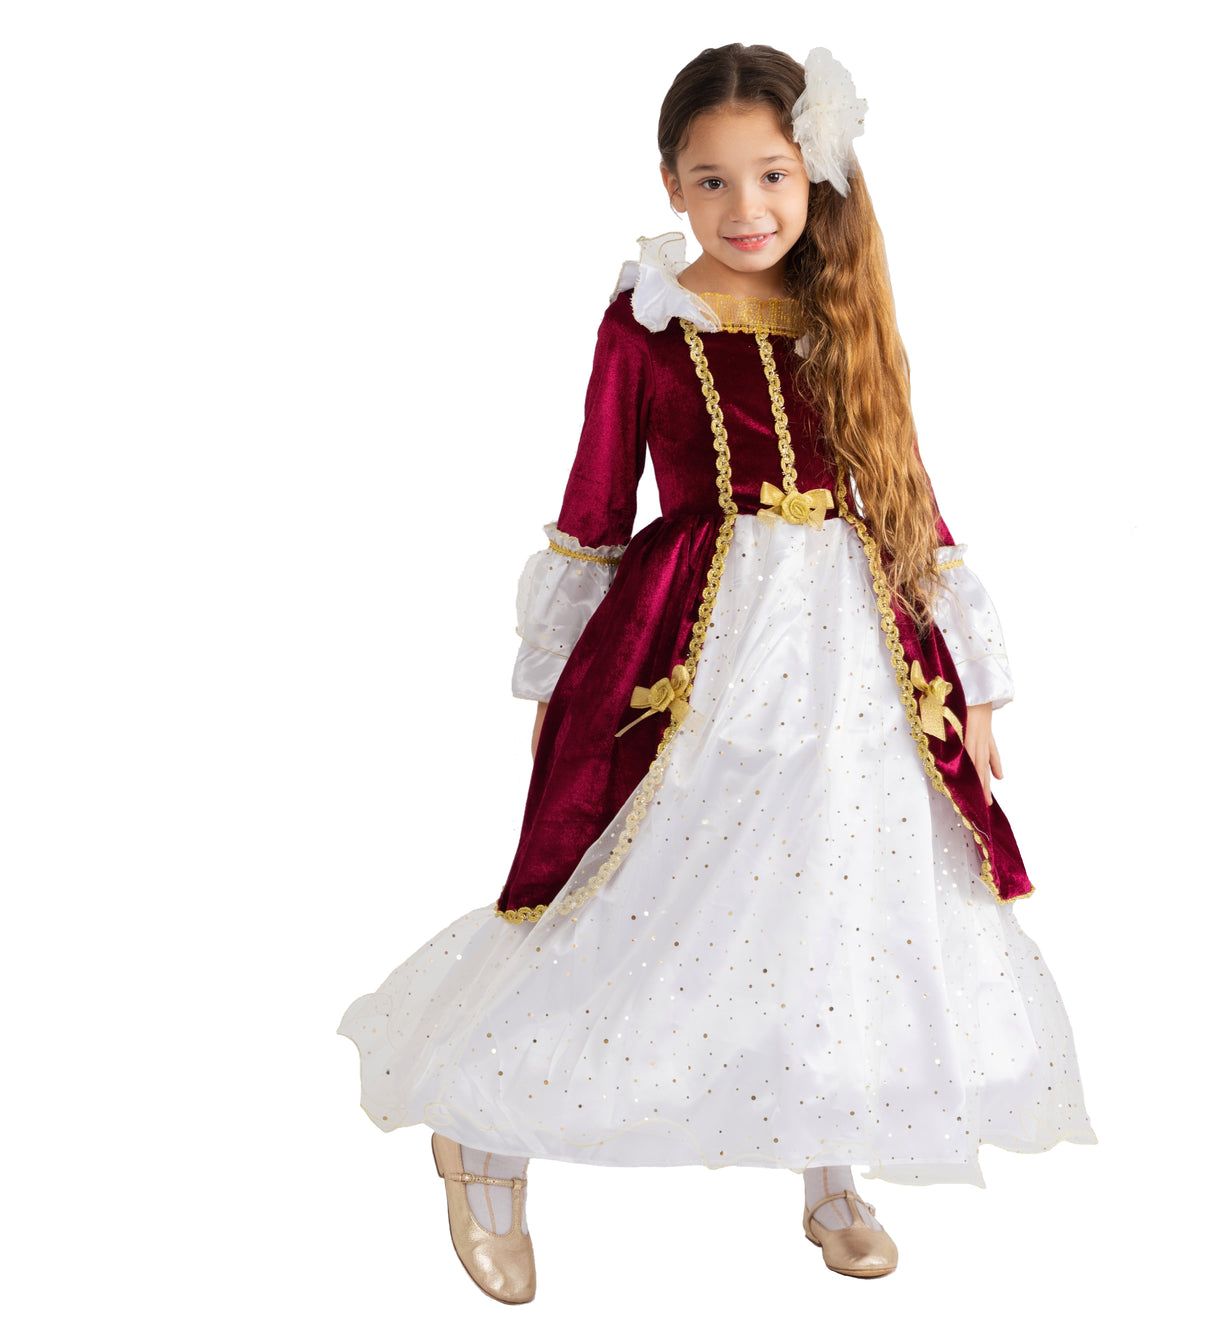 Red Princess Costume - Kids